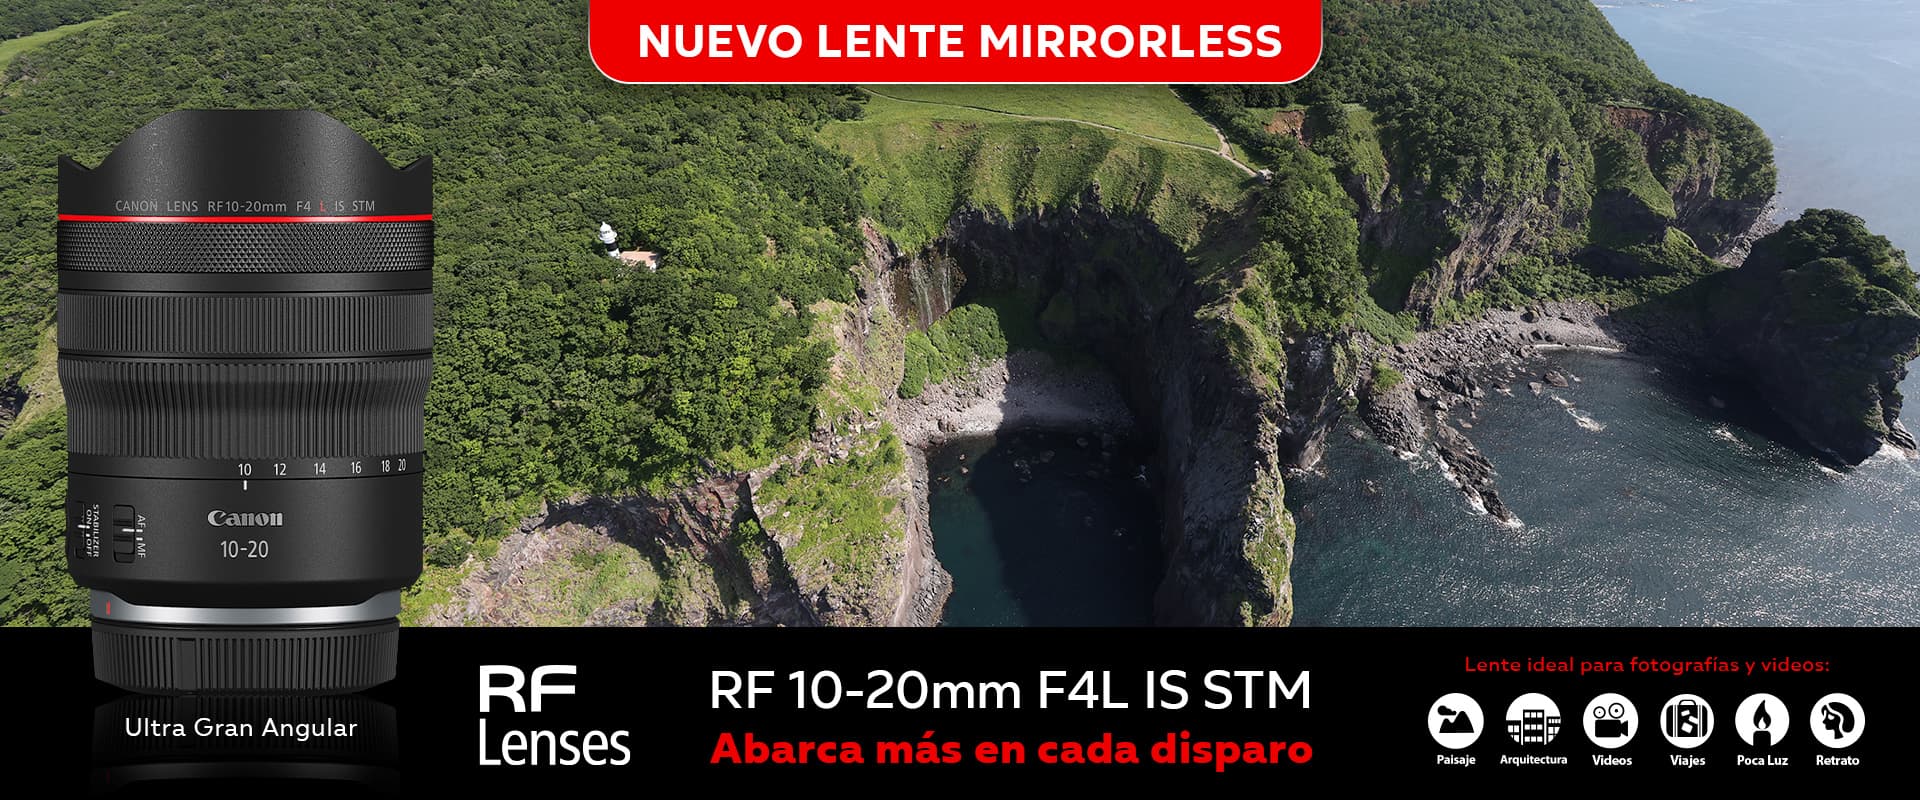 Nuevo Lente Mirrorless - Lente RF 10-20mm F4L IS STM